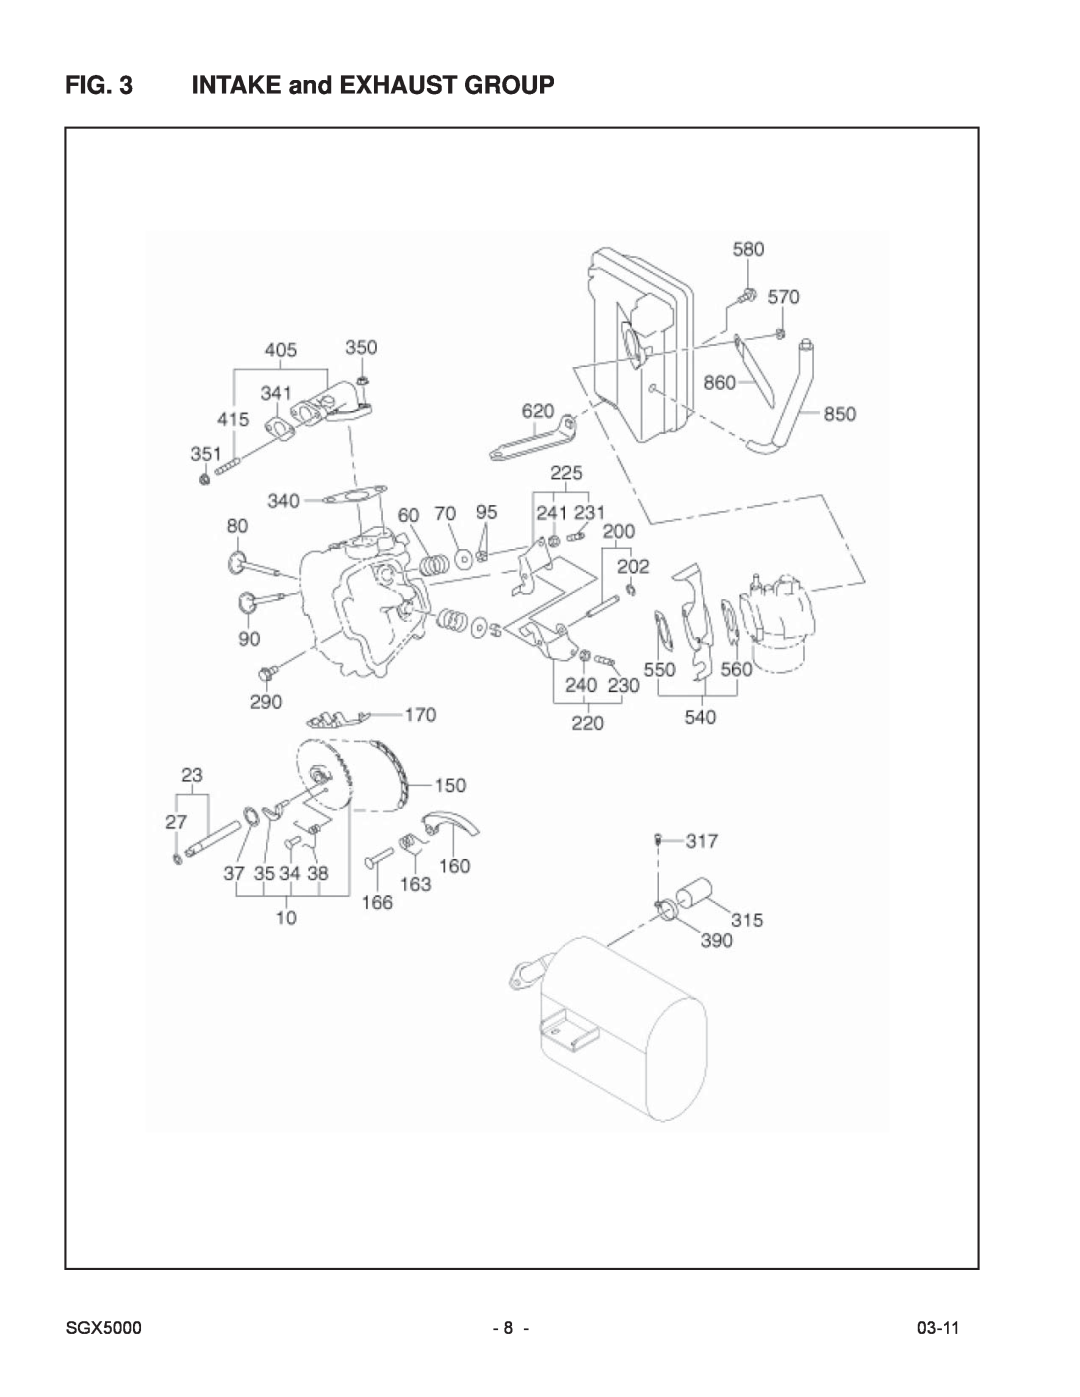 Subaru SGX5000 manual INTAKE and EXHAUST GROUP, 03-11 